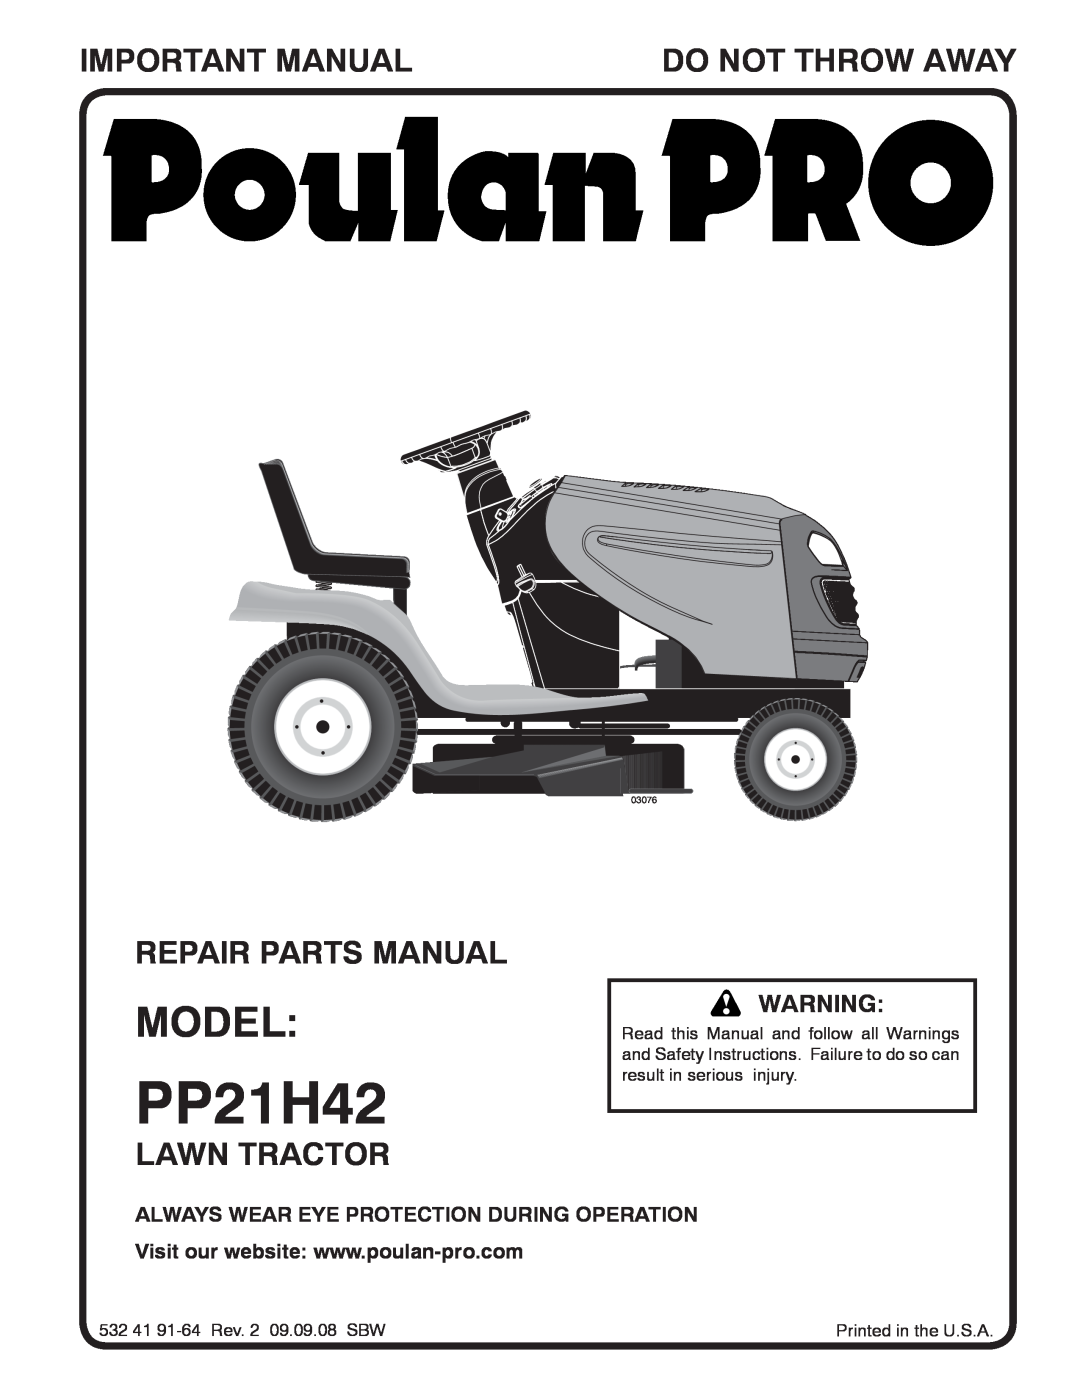 Poulan 532 41 91-64 manual PP21H42, Model, Important Manual, Do Not Throw Away, Repair Parts Manual, Lawn Tractor, 03076 